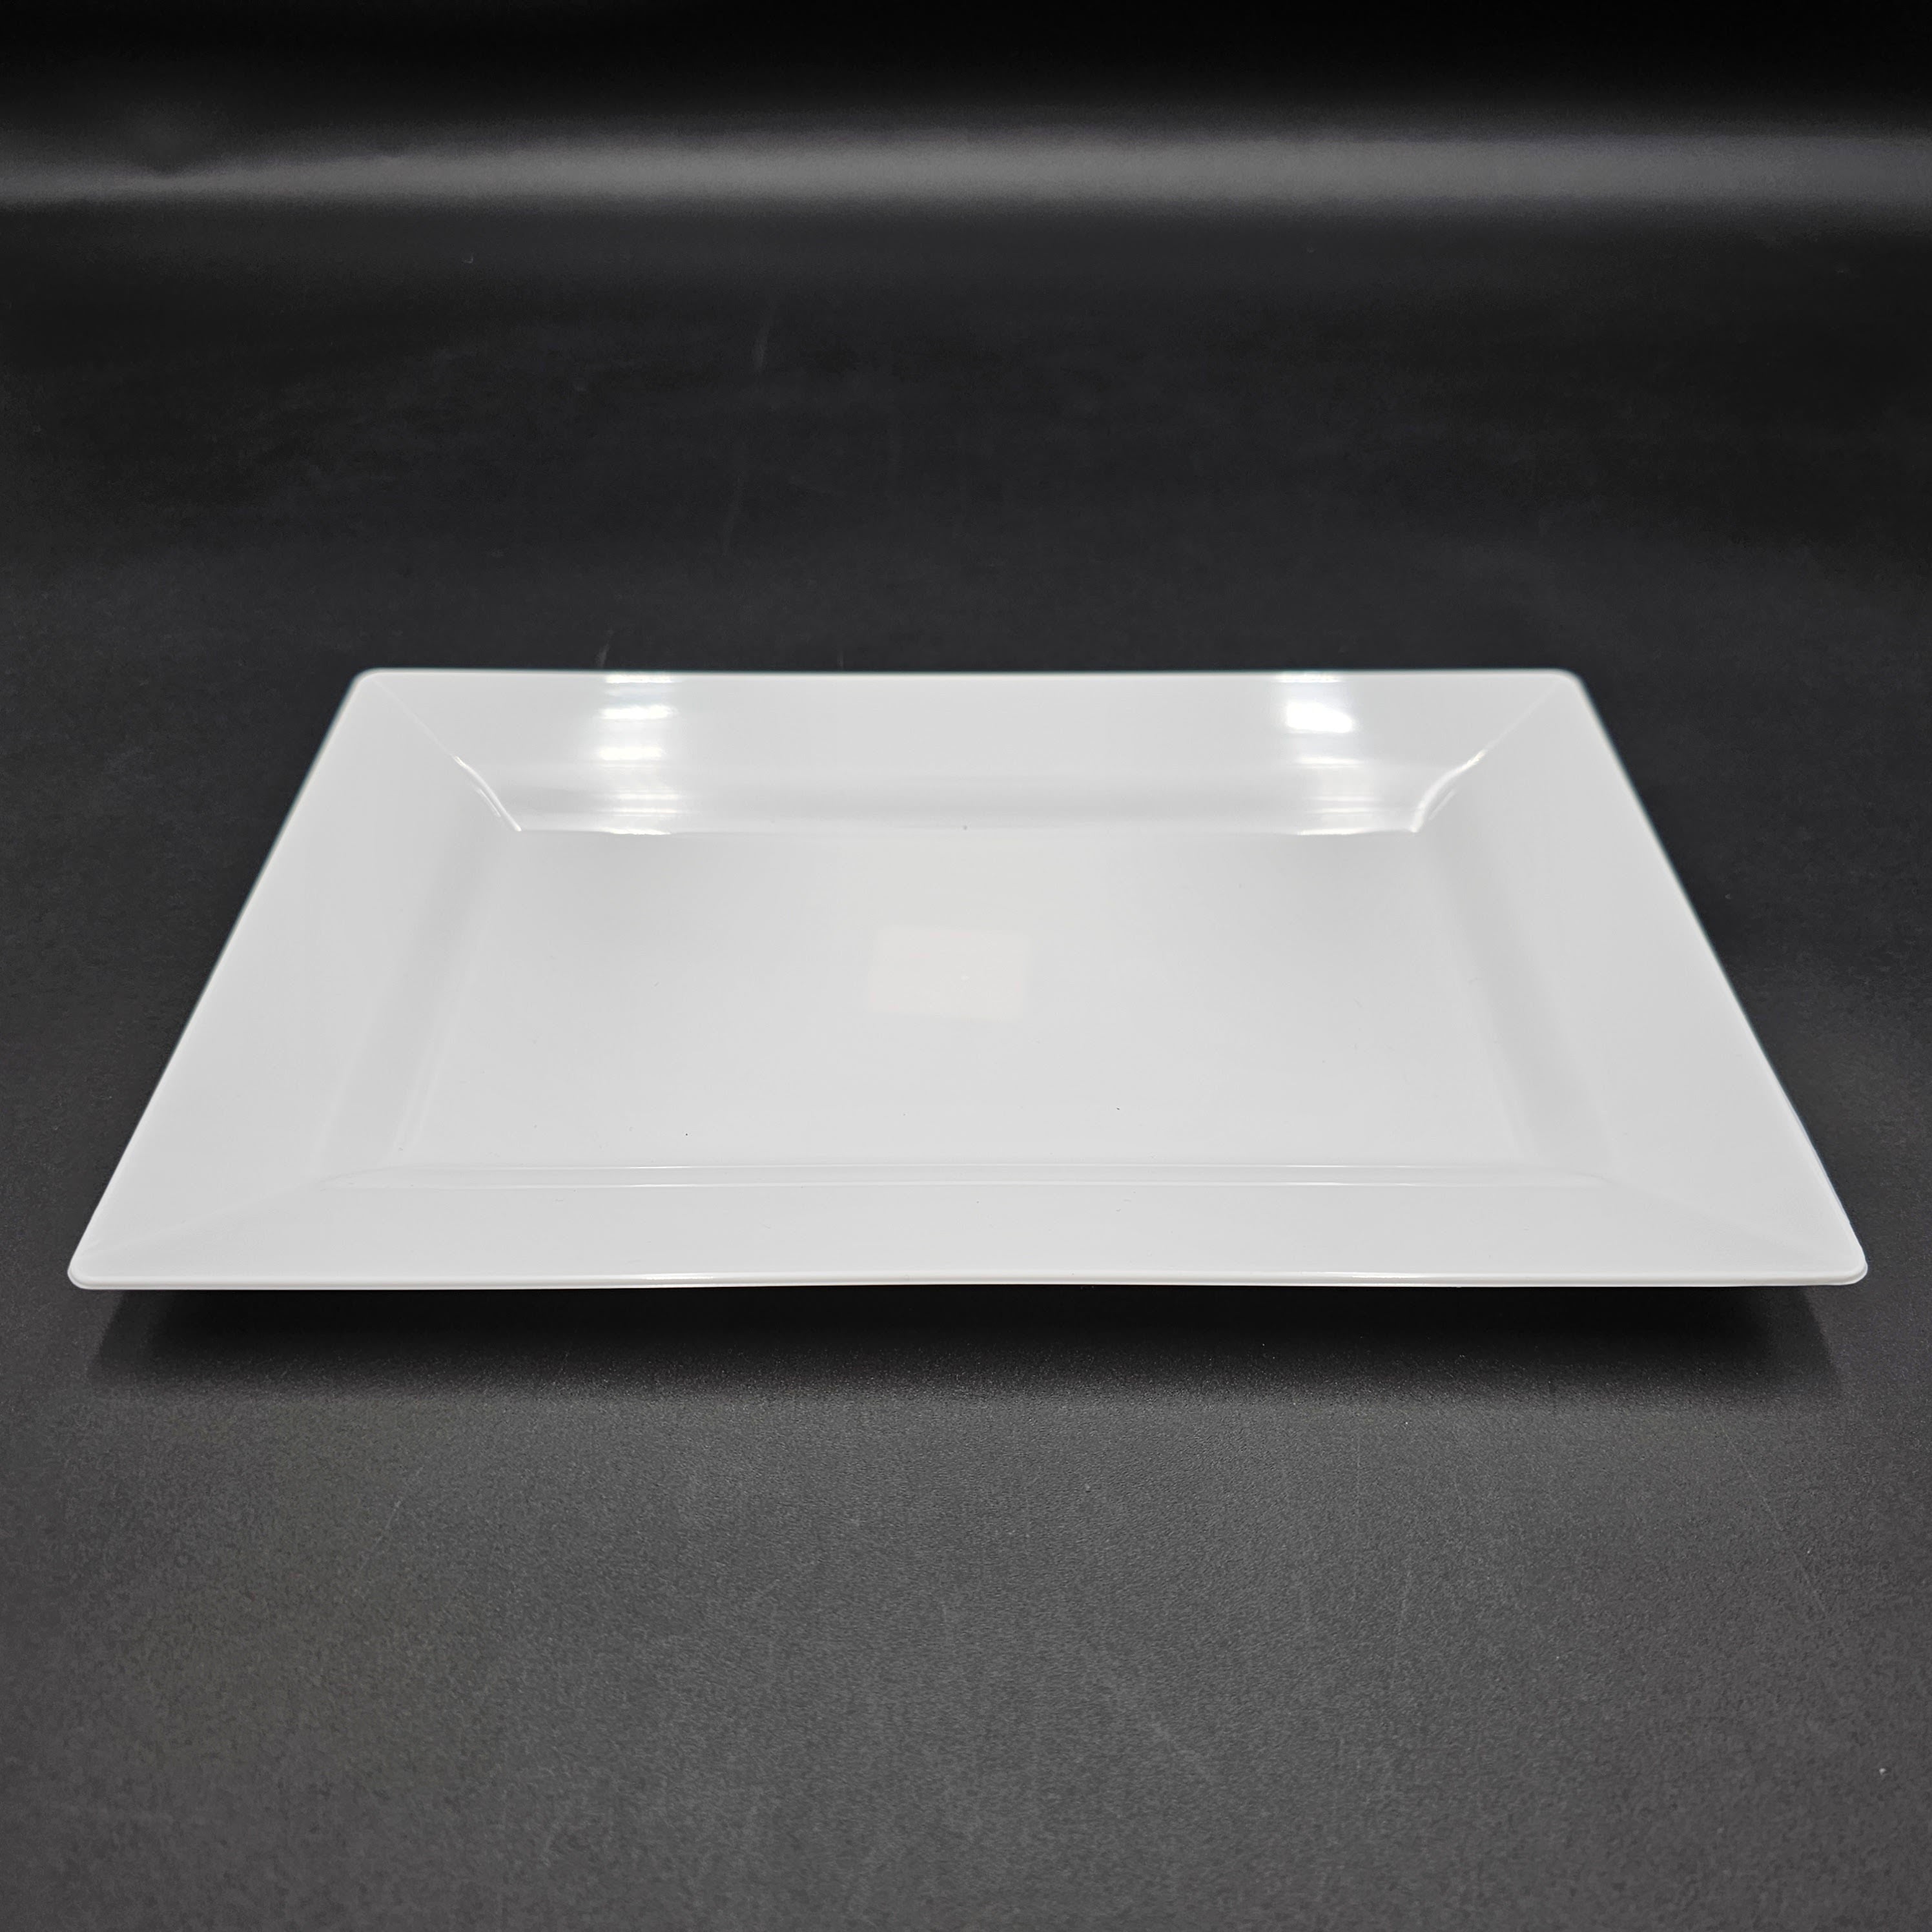 EMI Yoshi Plastic Rectangular Luncheon Plate White 12" x 7.5" EMI-RP9W - 120/Case